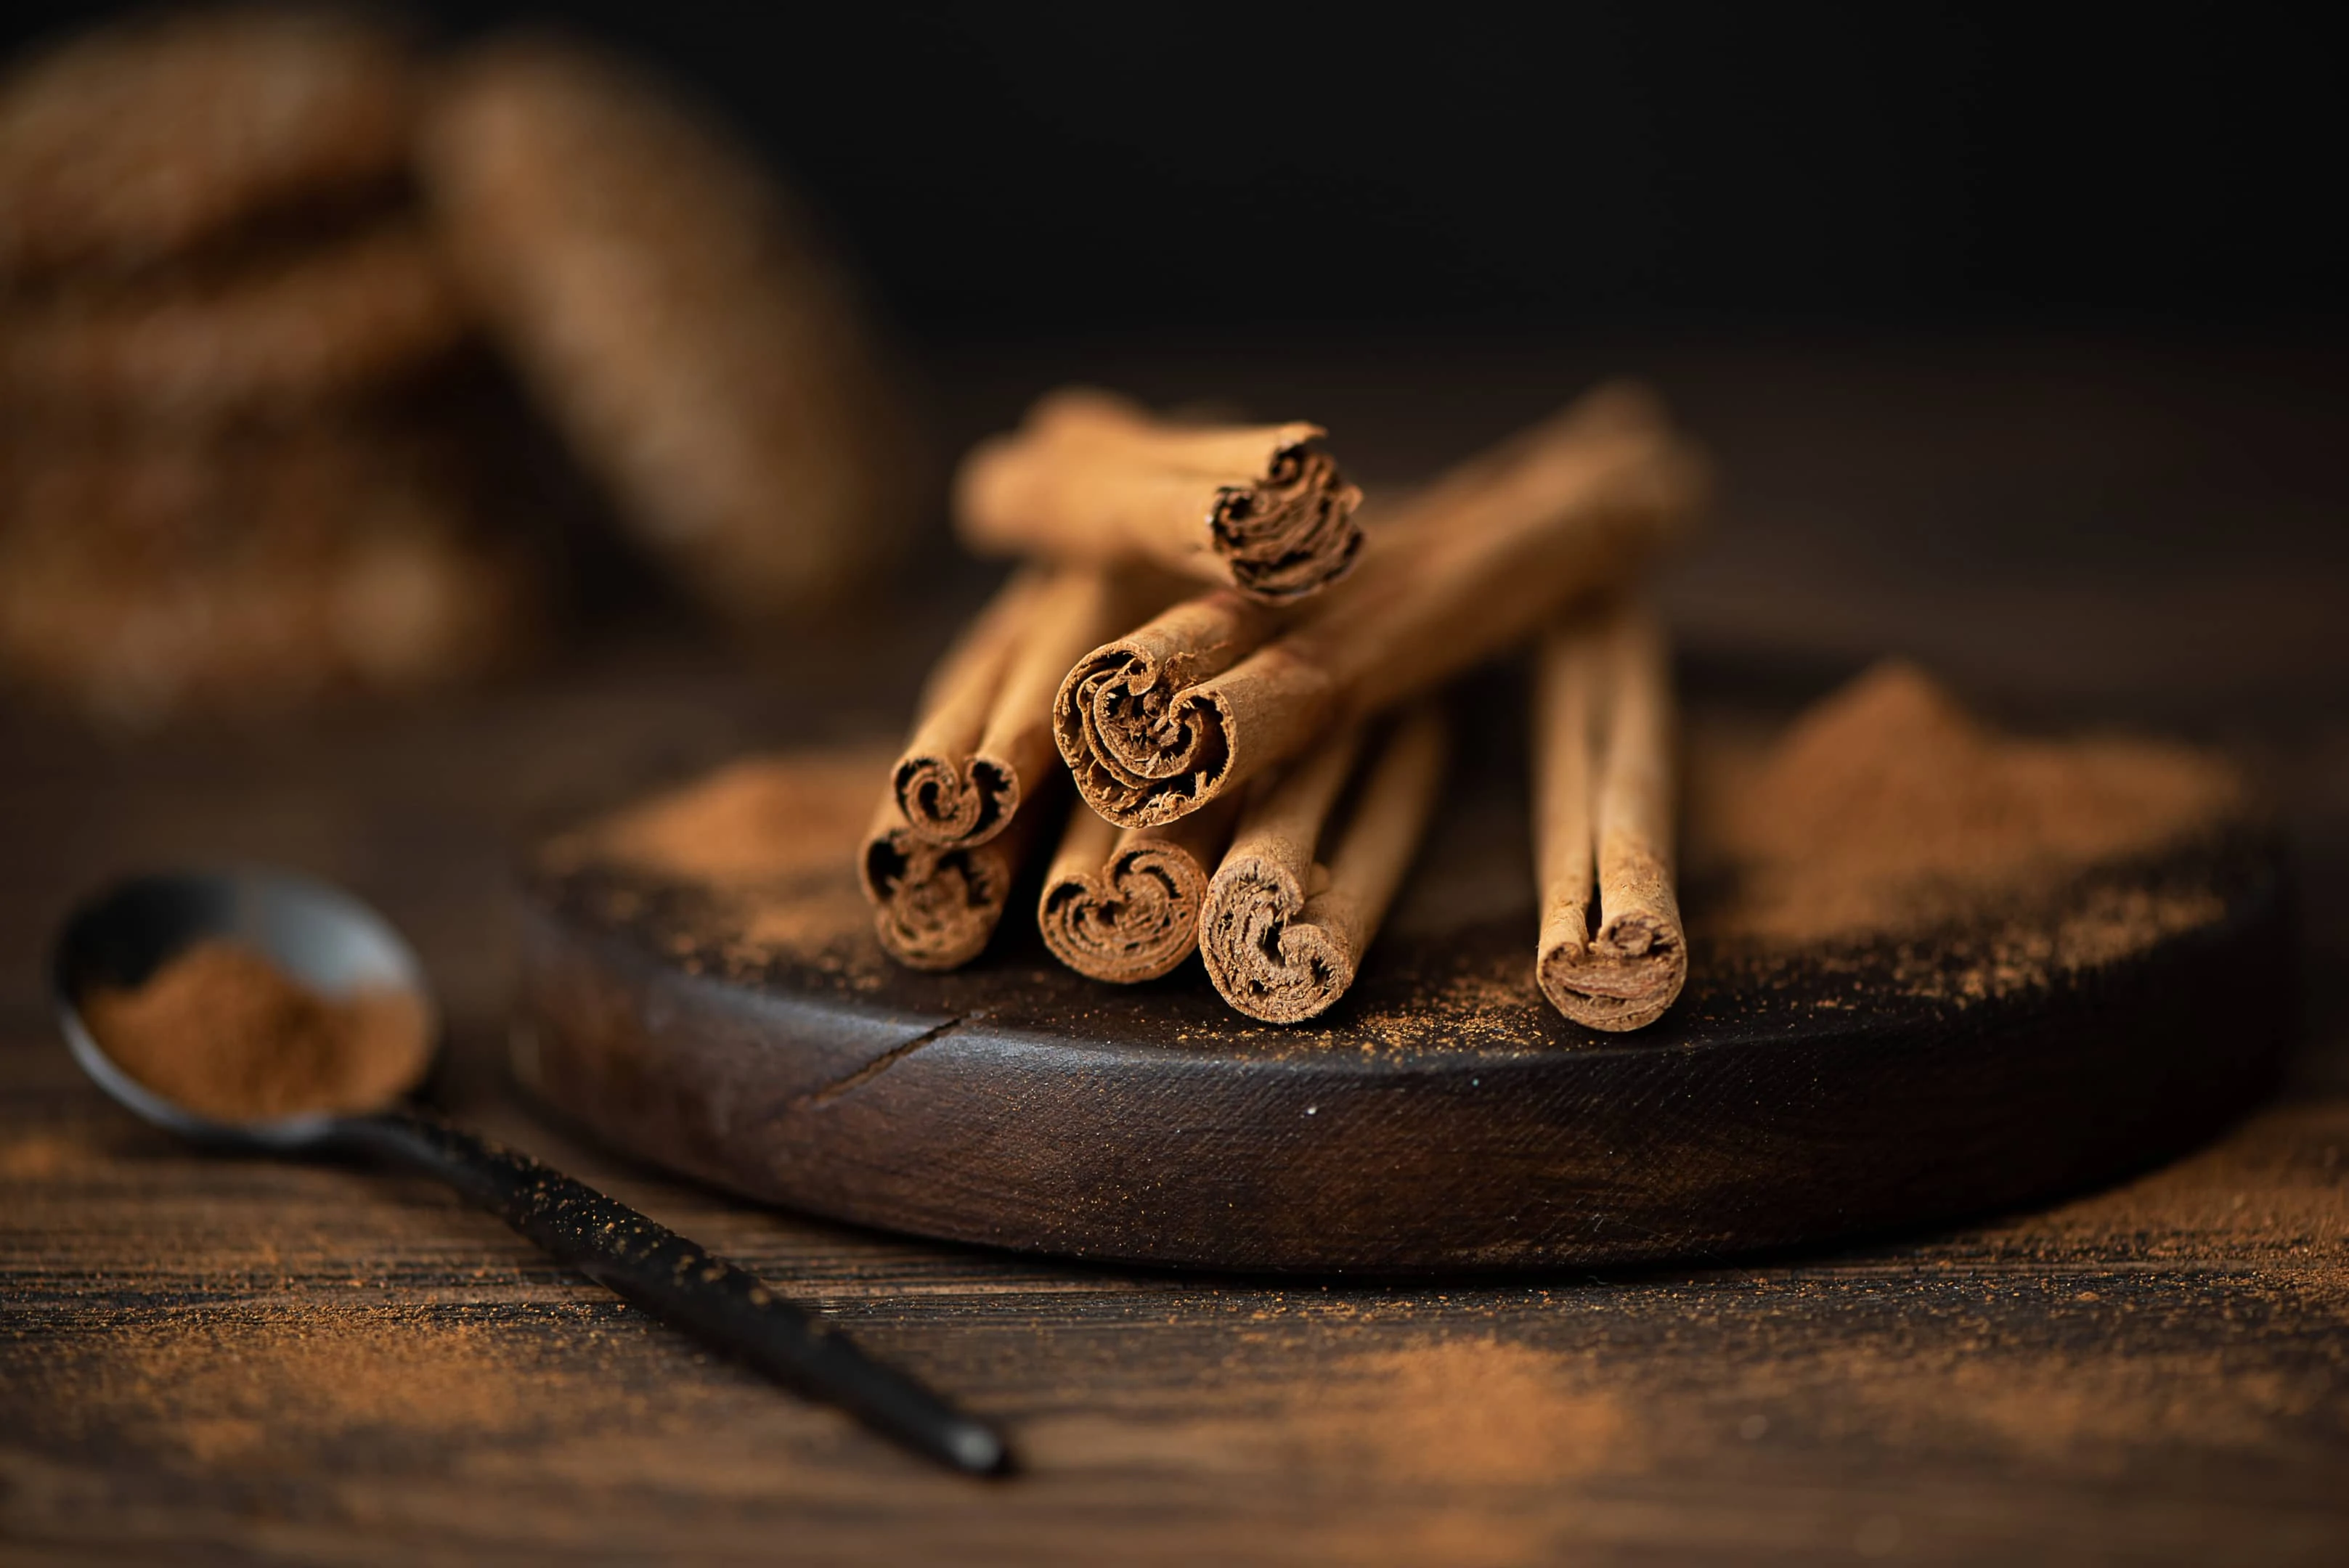 Cinnamon sticks and powder on wooden board